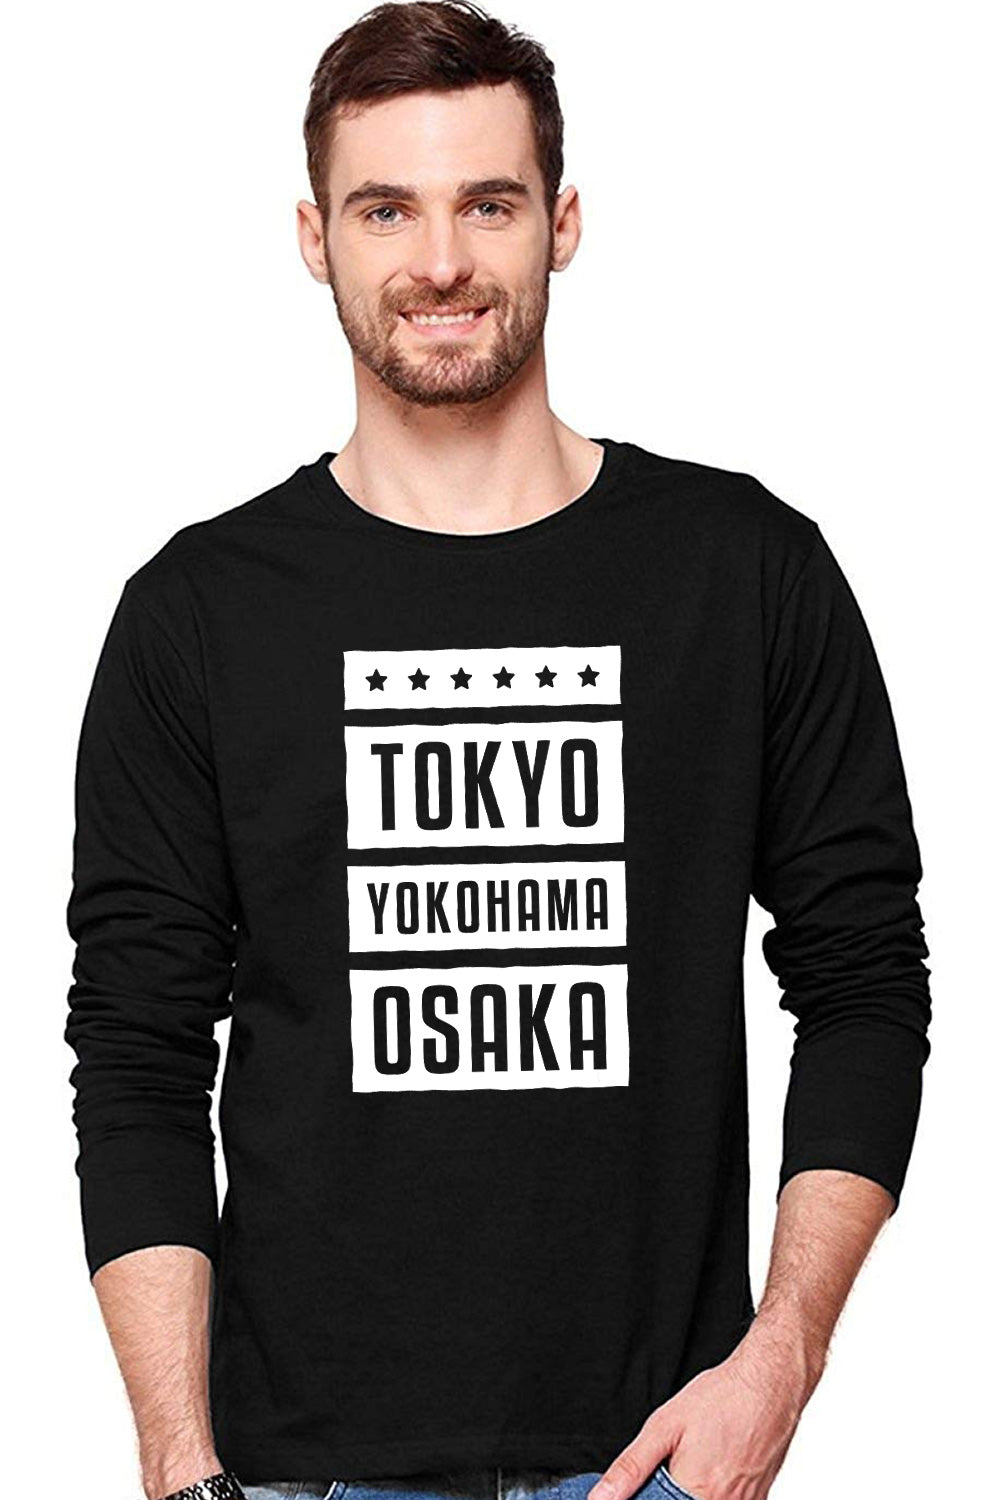 Tokyo Yokohama Osaka - Authentic Styched Full Sleeve Graphic Printed Black Cotton T-Shirt